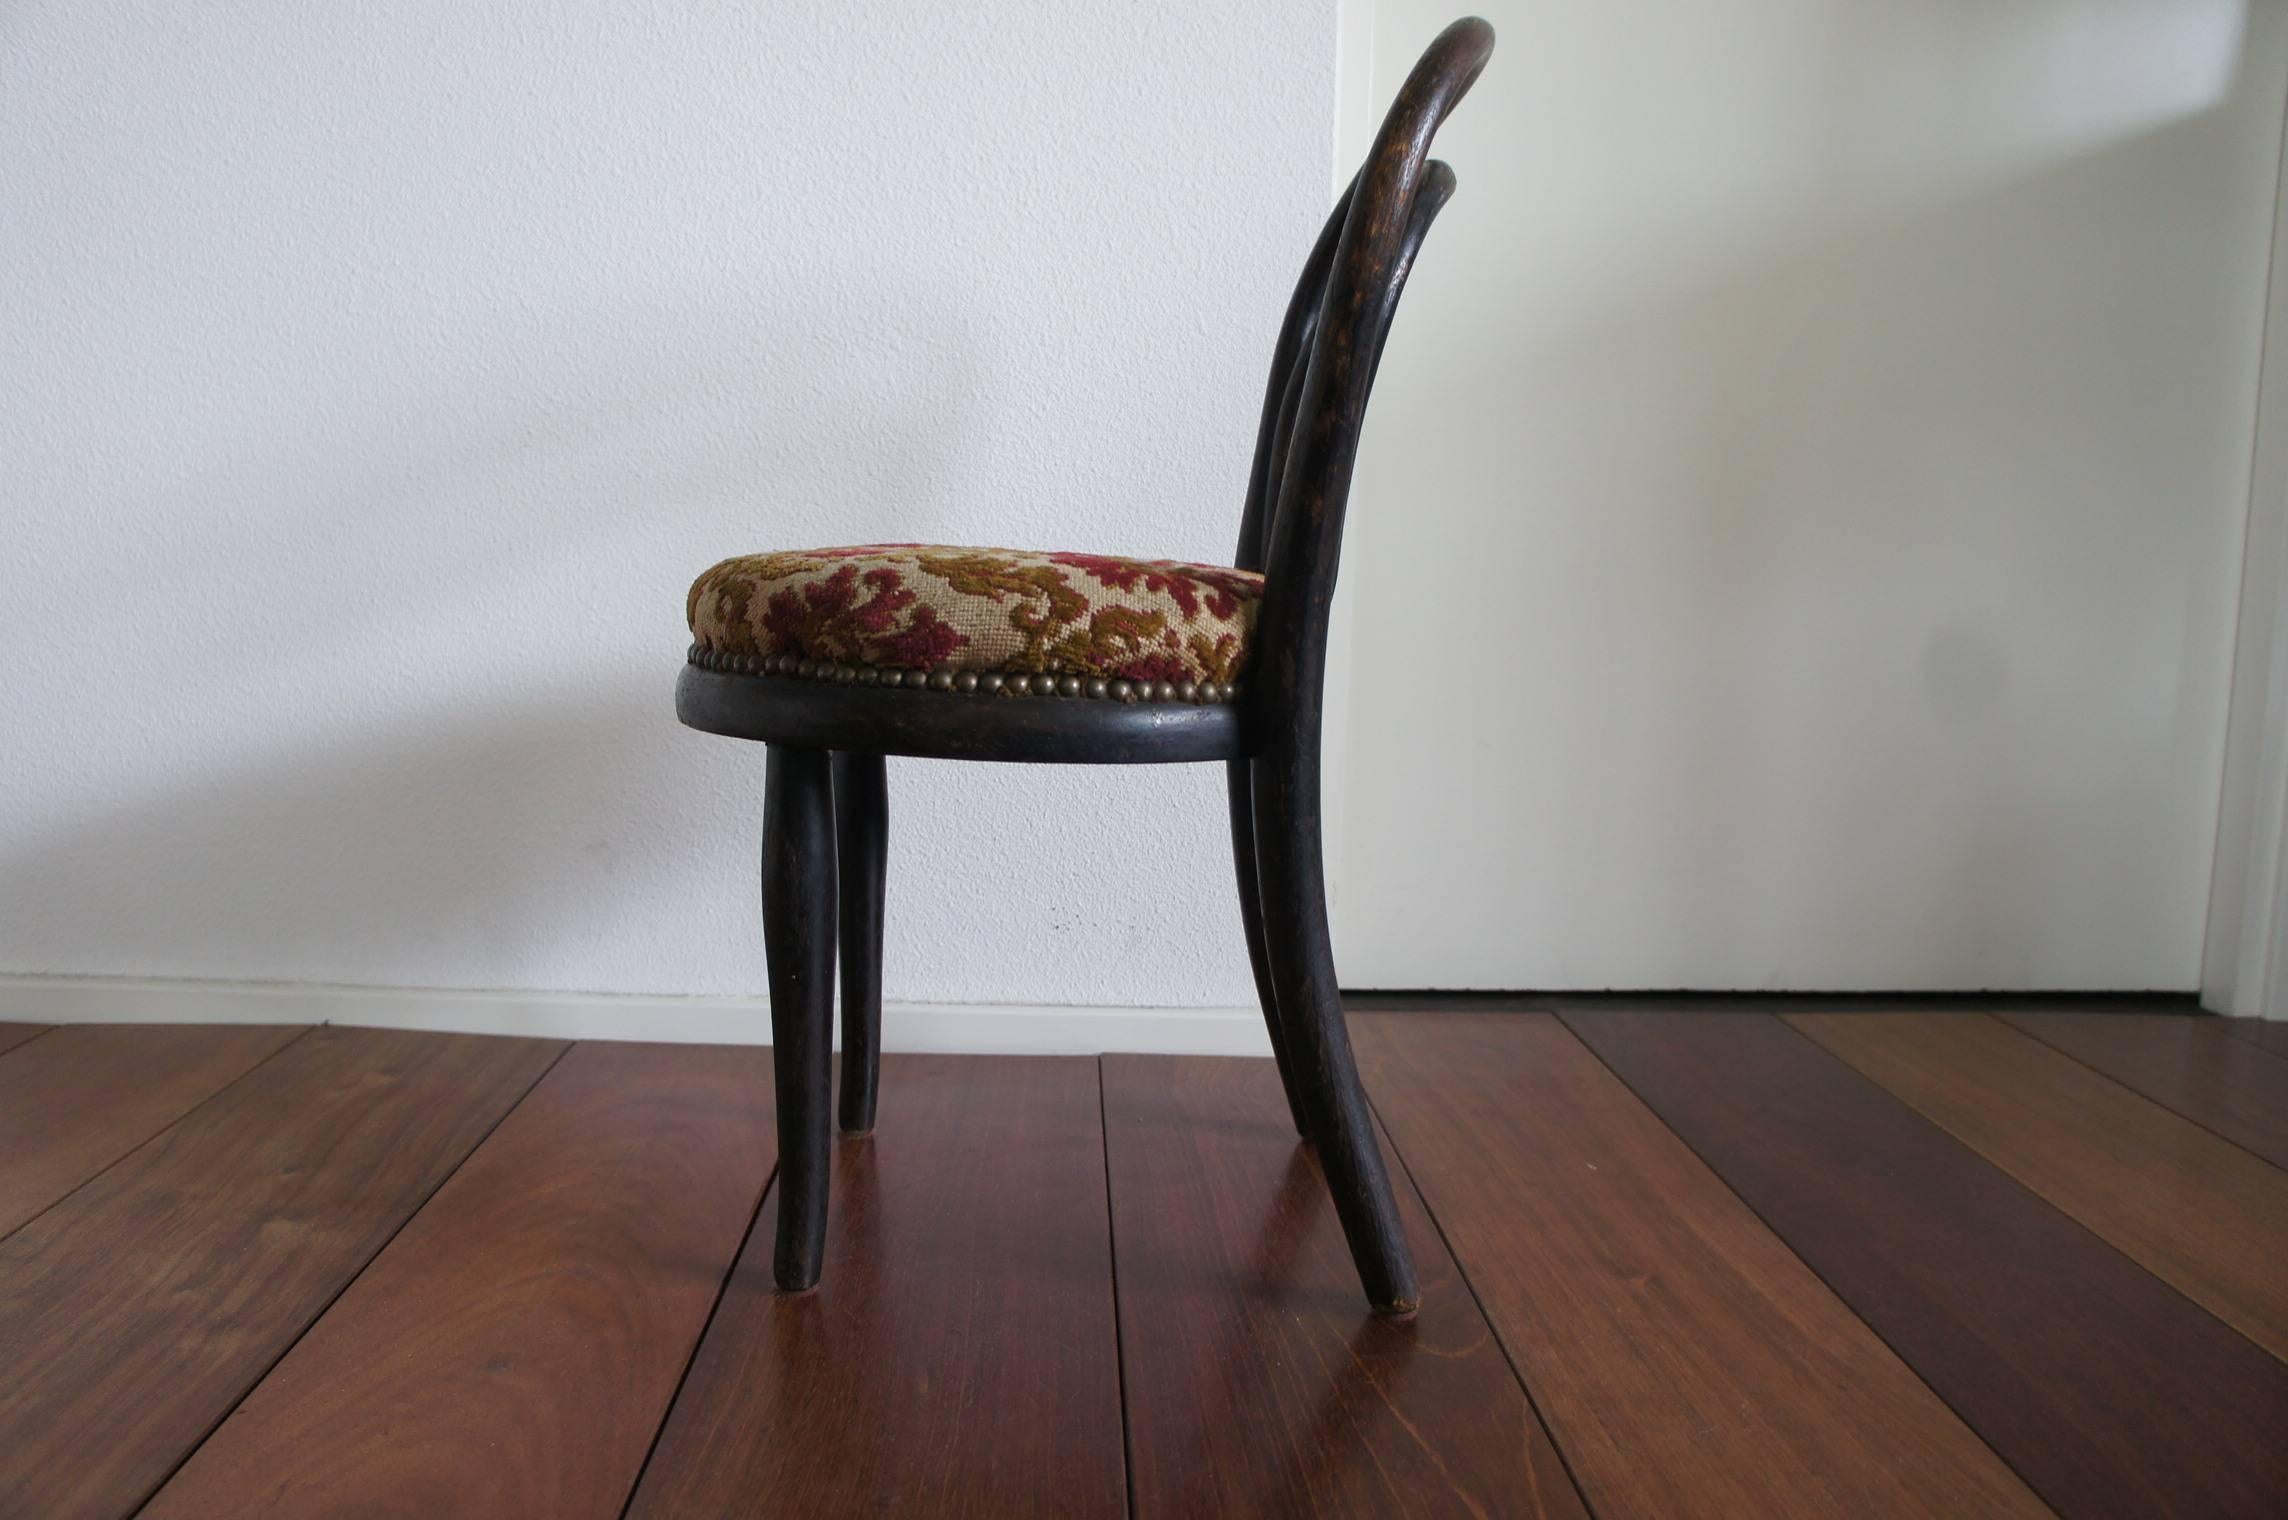 Biedermeier Rare and Original Antique Bentwood Thonet Child's Chair 19th Century Furniture For Sale